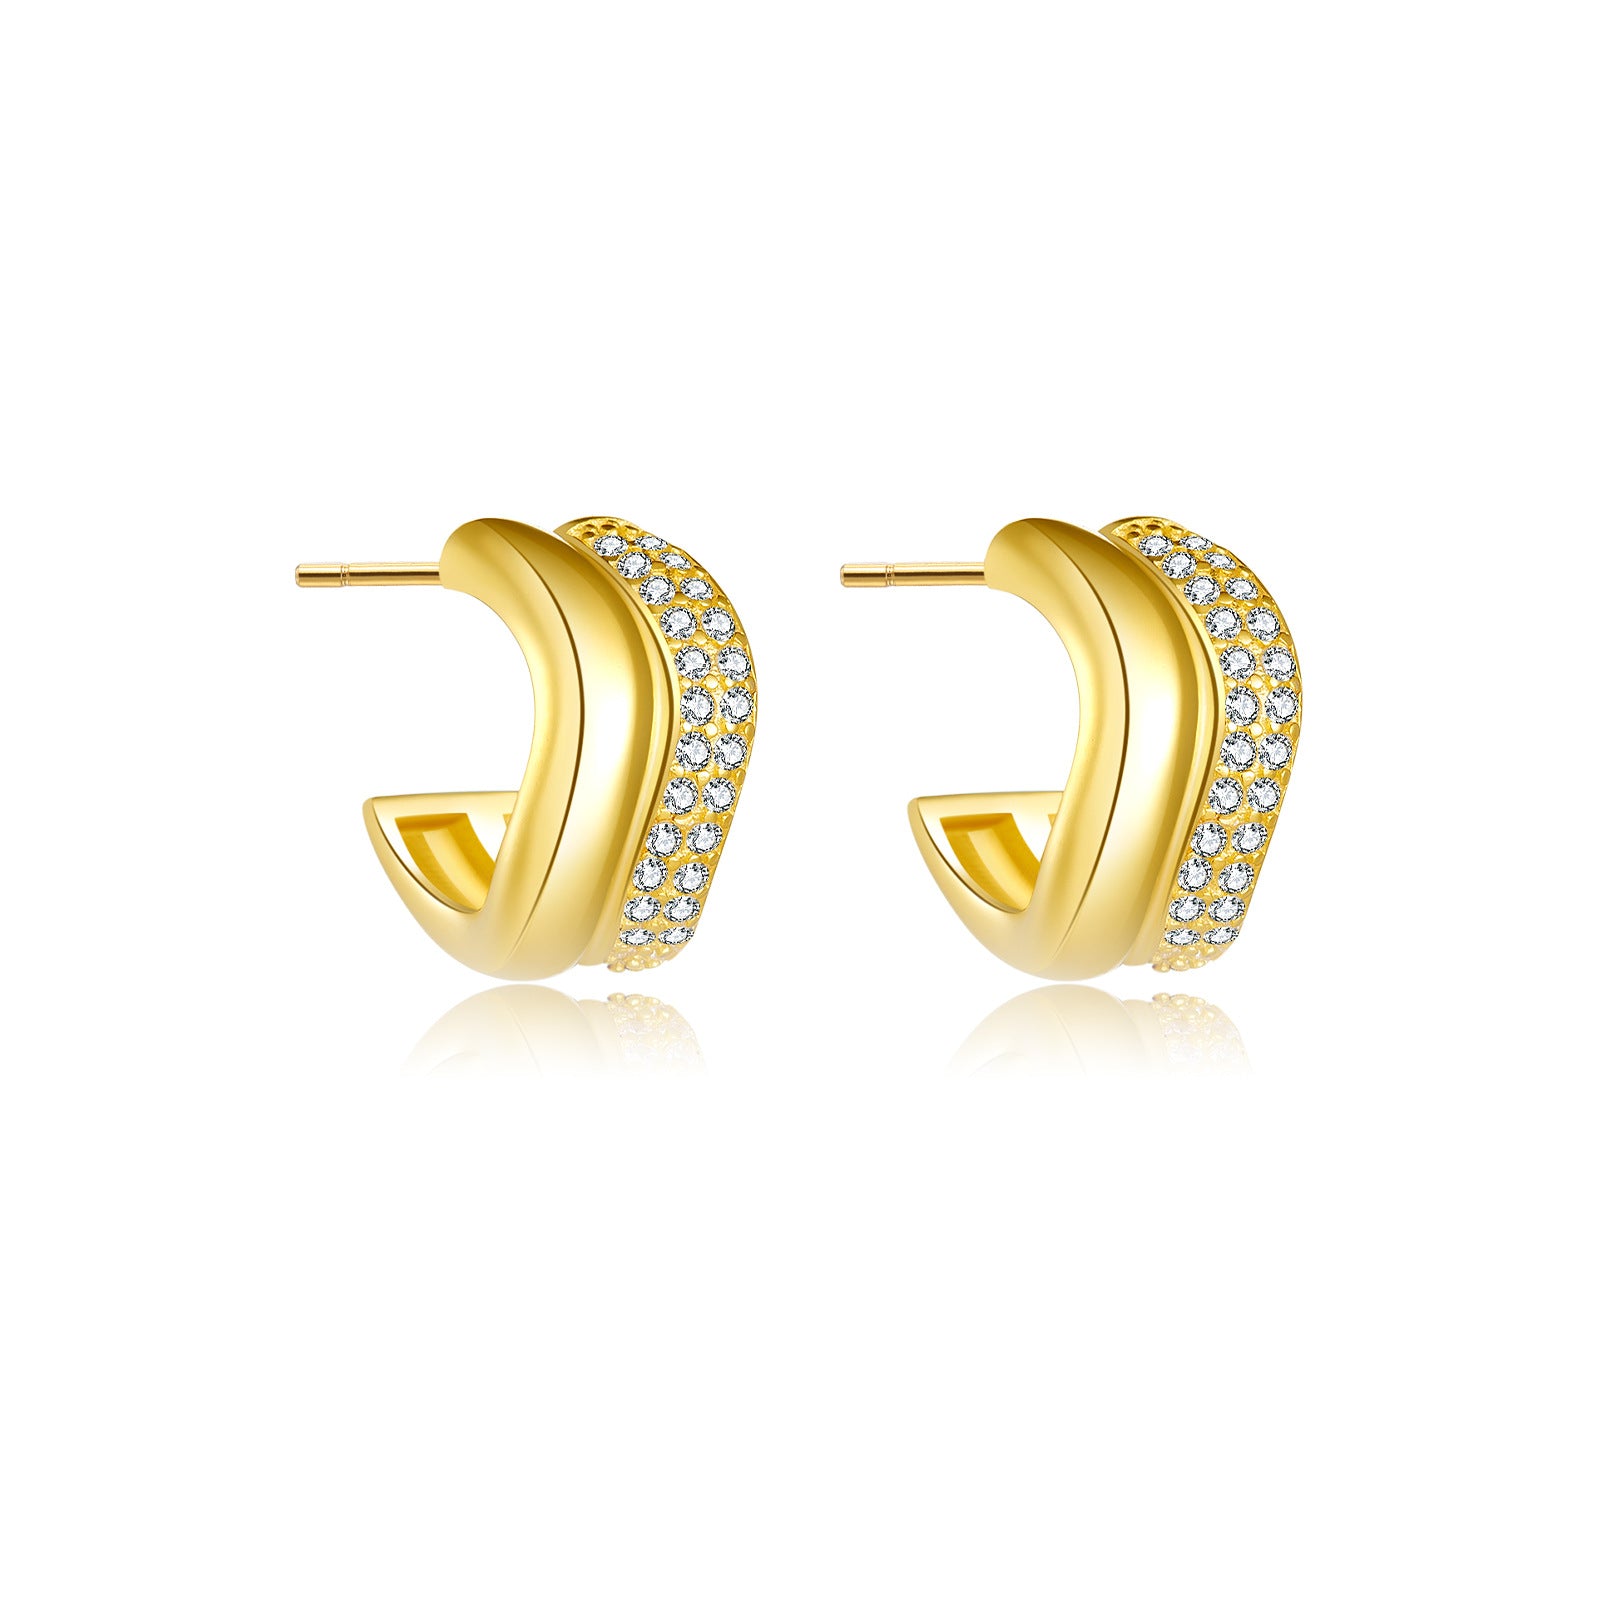 Geometric Circle High-grade S925 Sterling Silver Earrings For Women